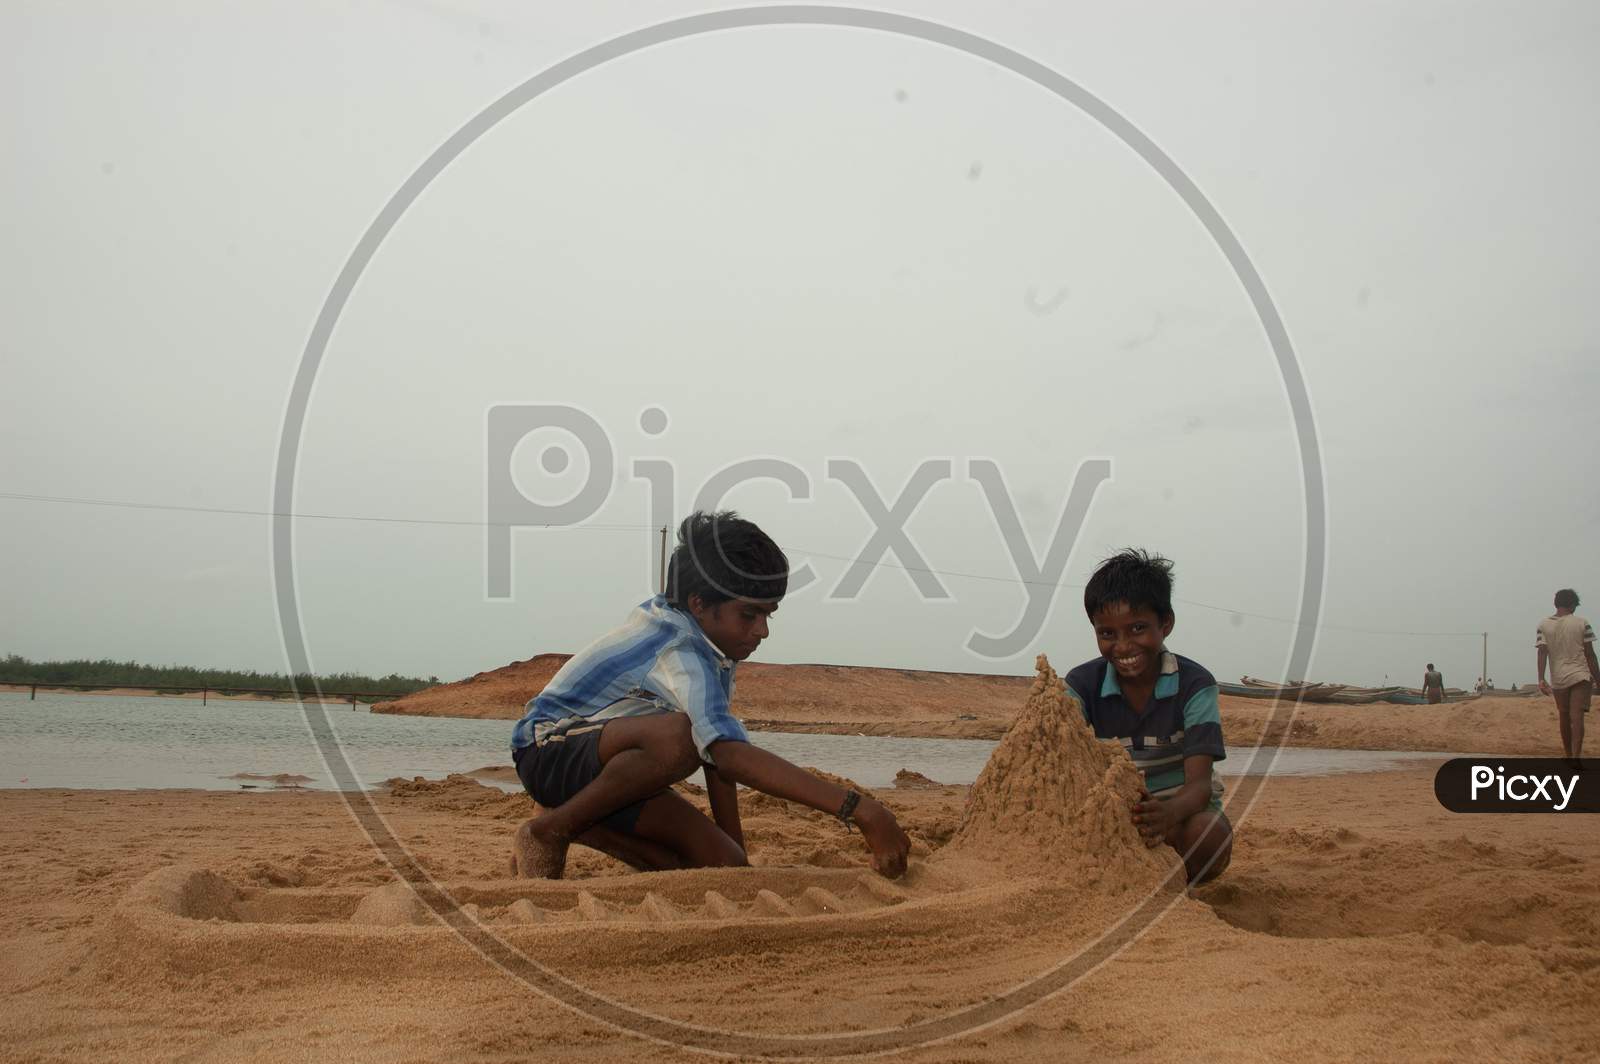 Indian local boys building sand castles